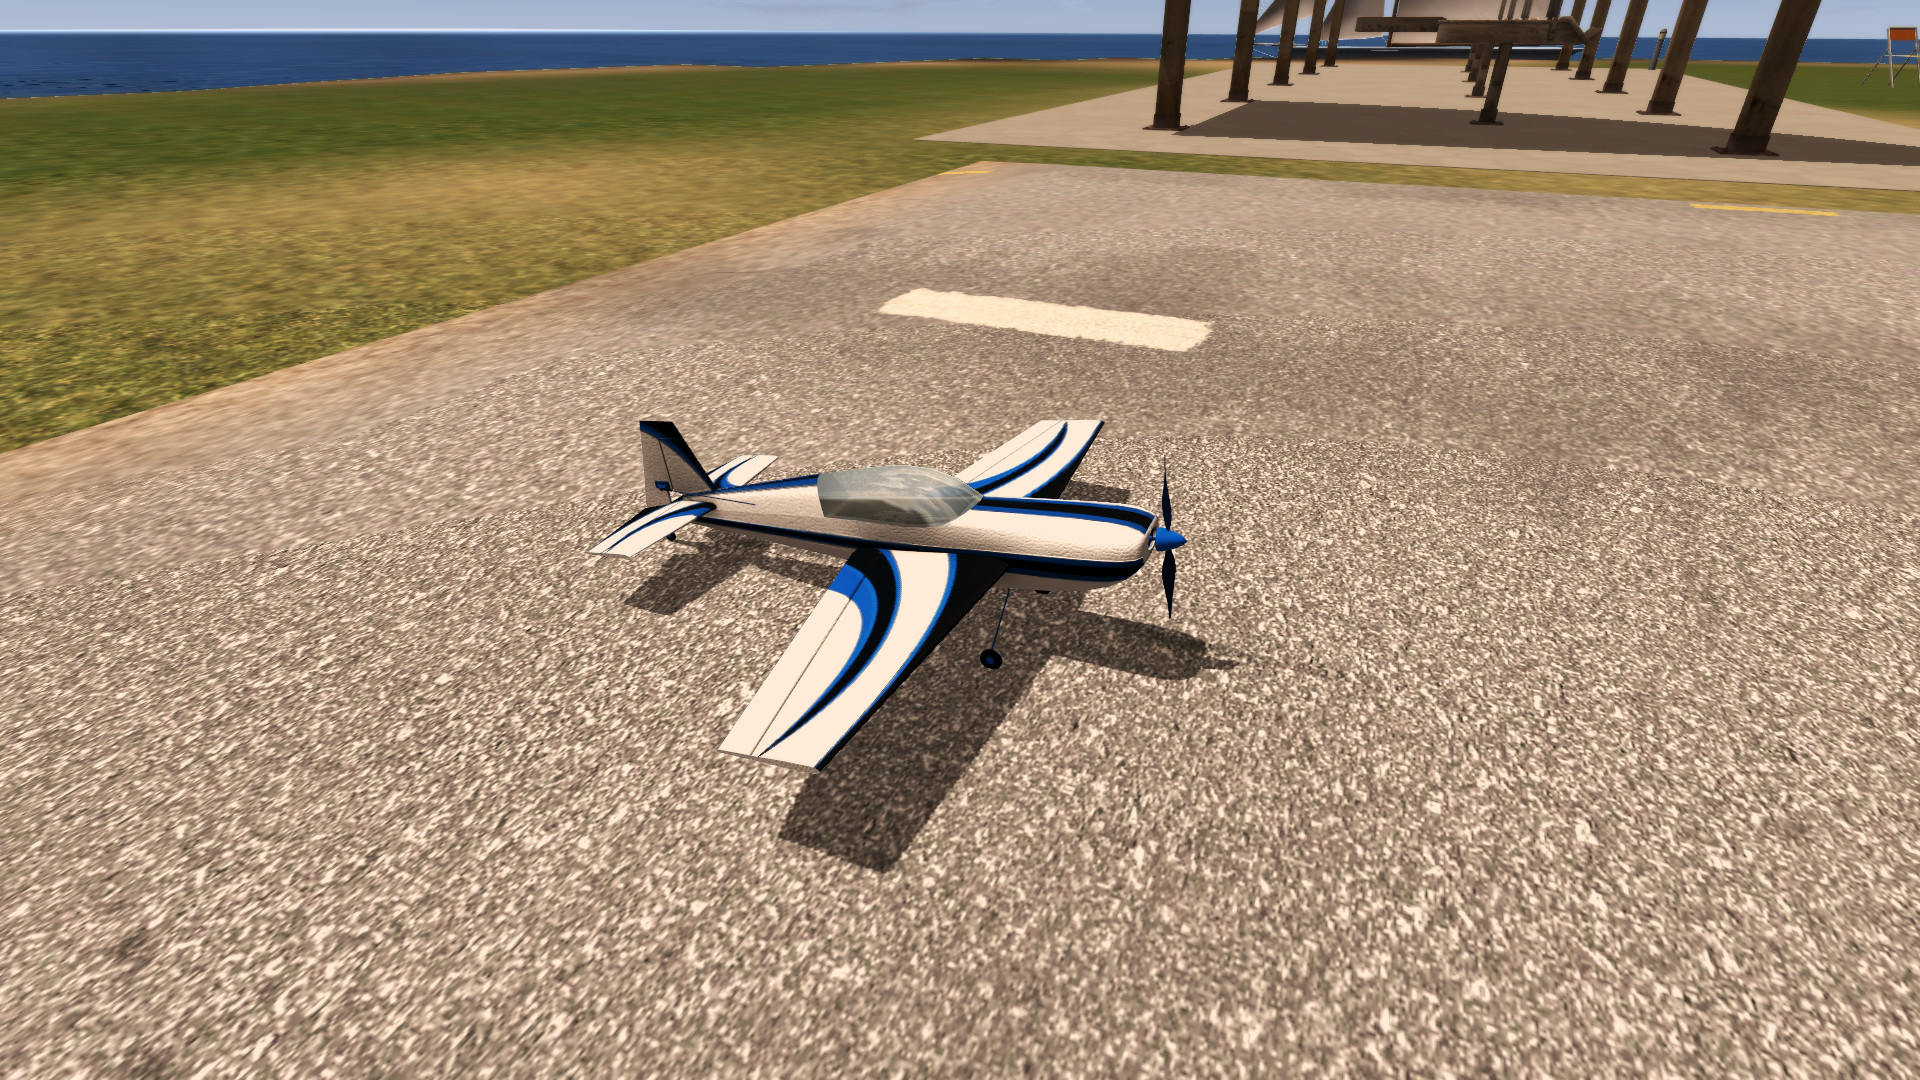 Extreme Plane Stunts Simulator download the new version